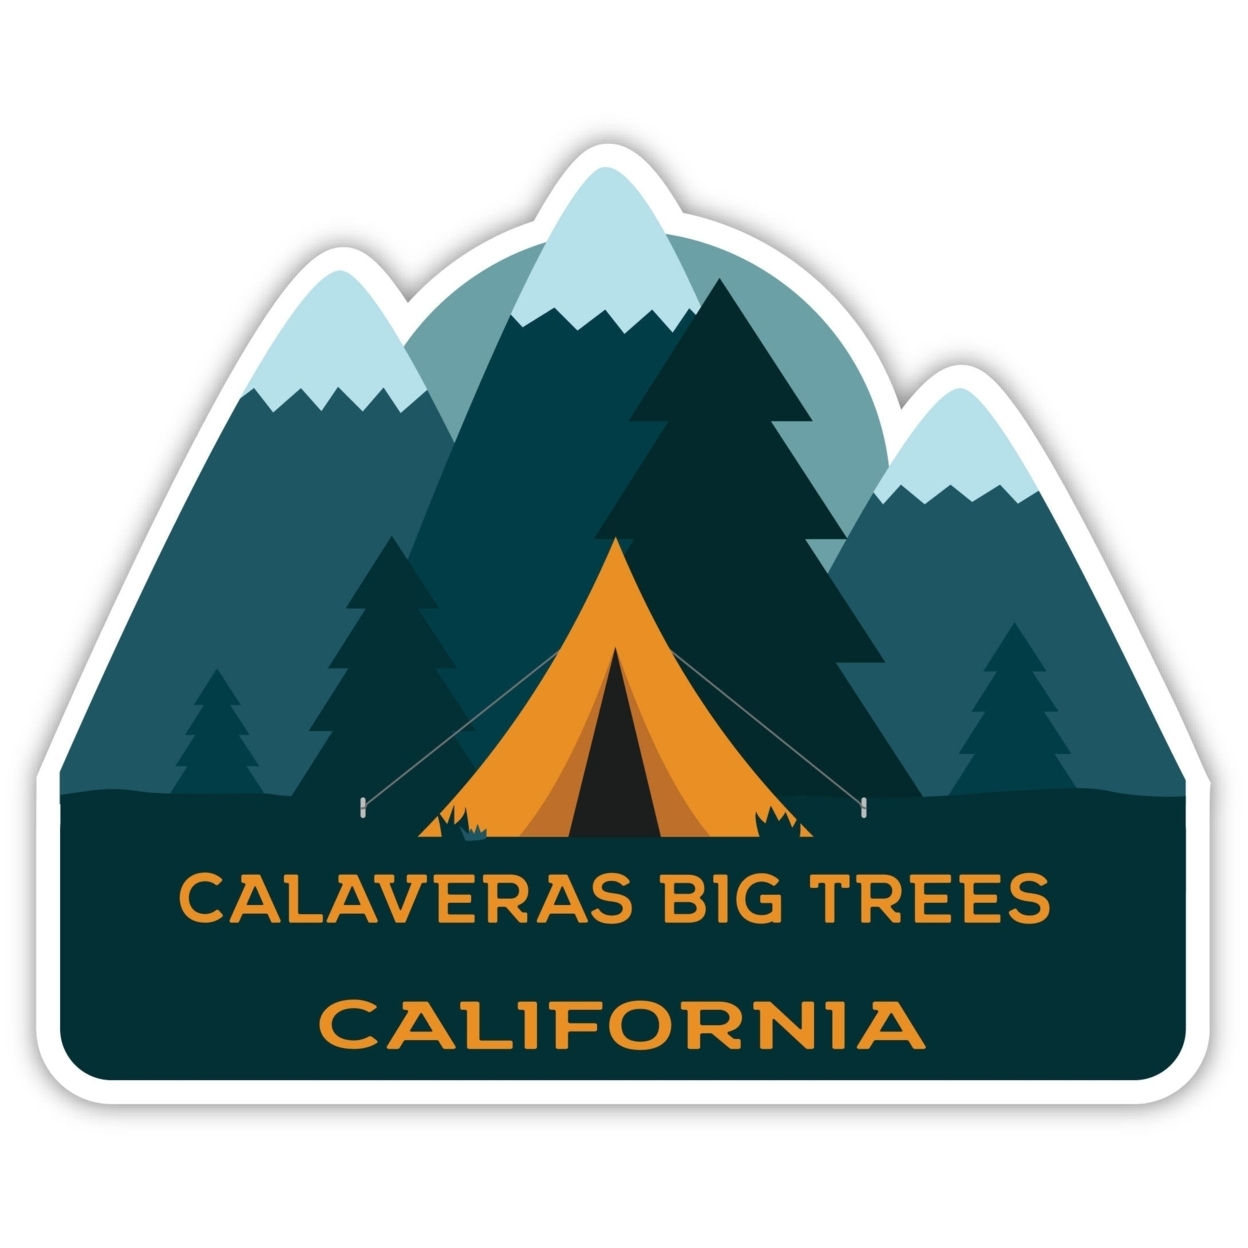 Calaveras Big Trees California Souvenir Decorative Stickers (Choose Theme And Size) - 4-Pack, 12-Inch, Camp Life